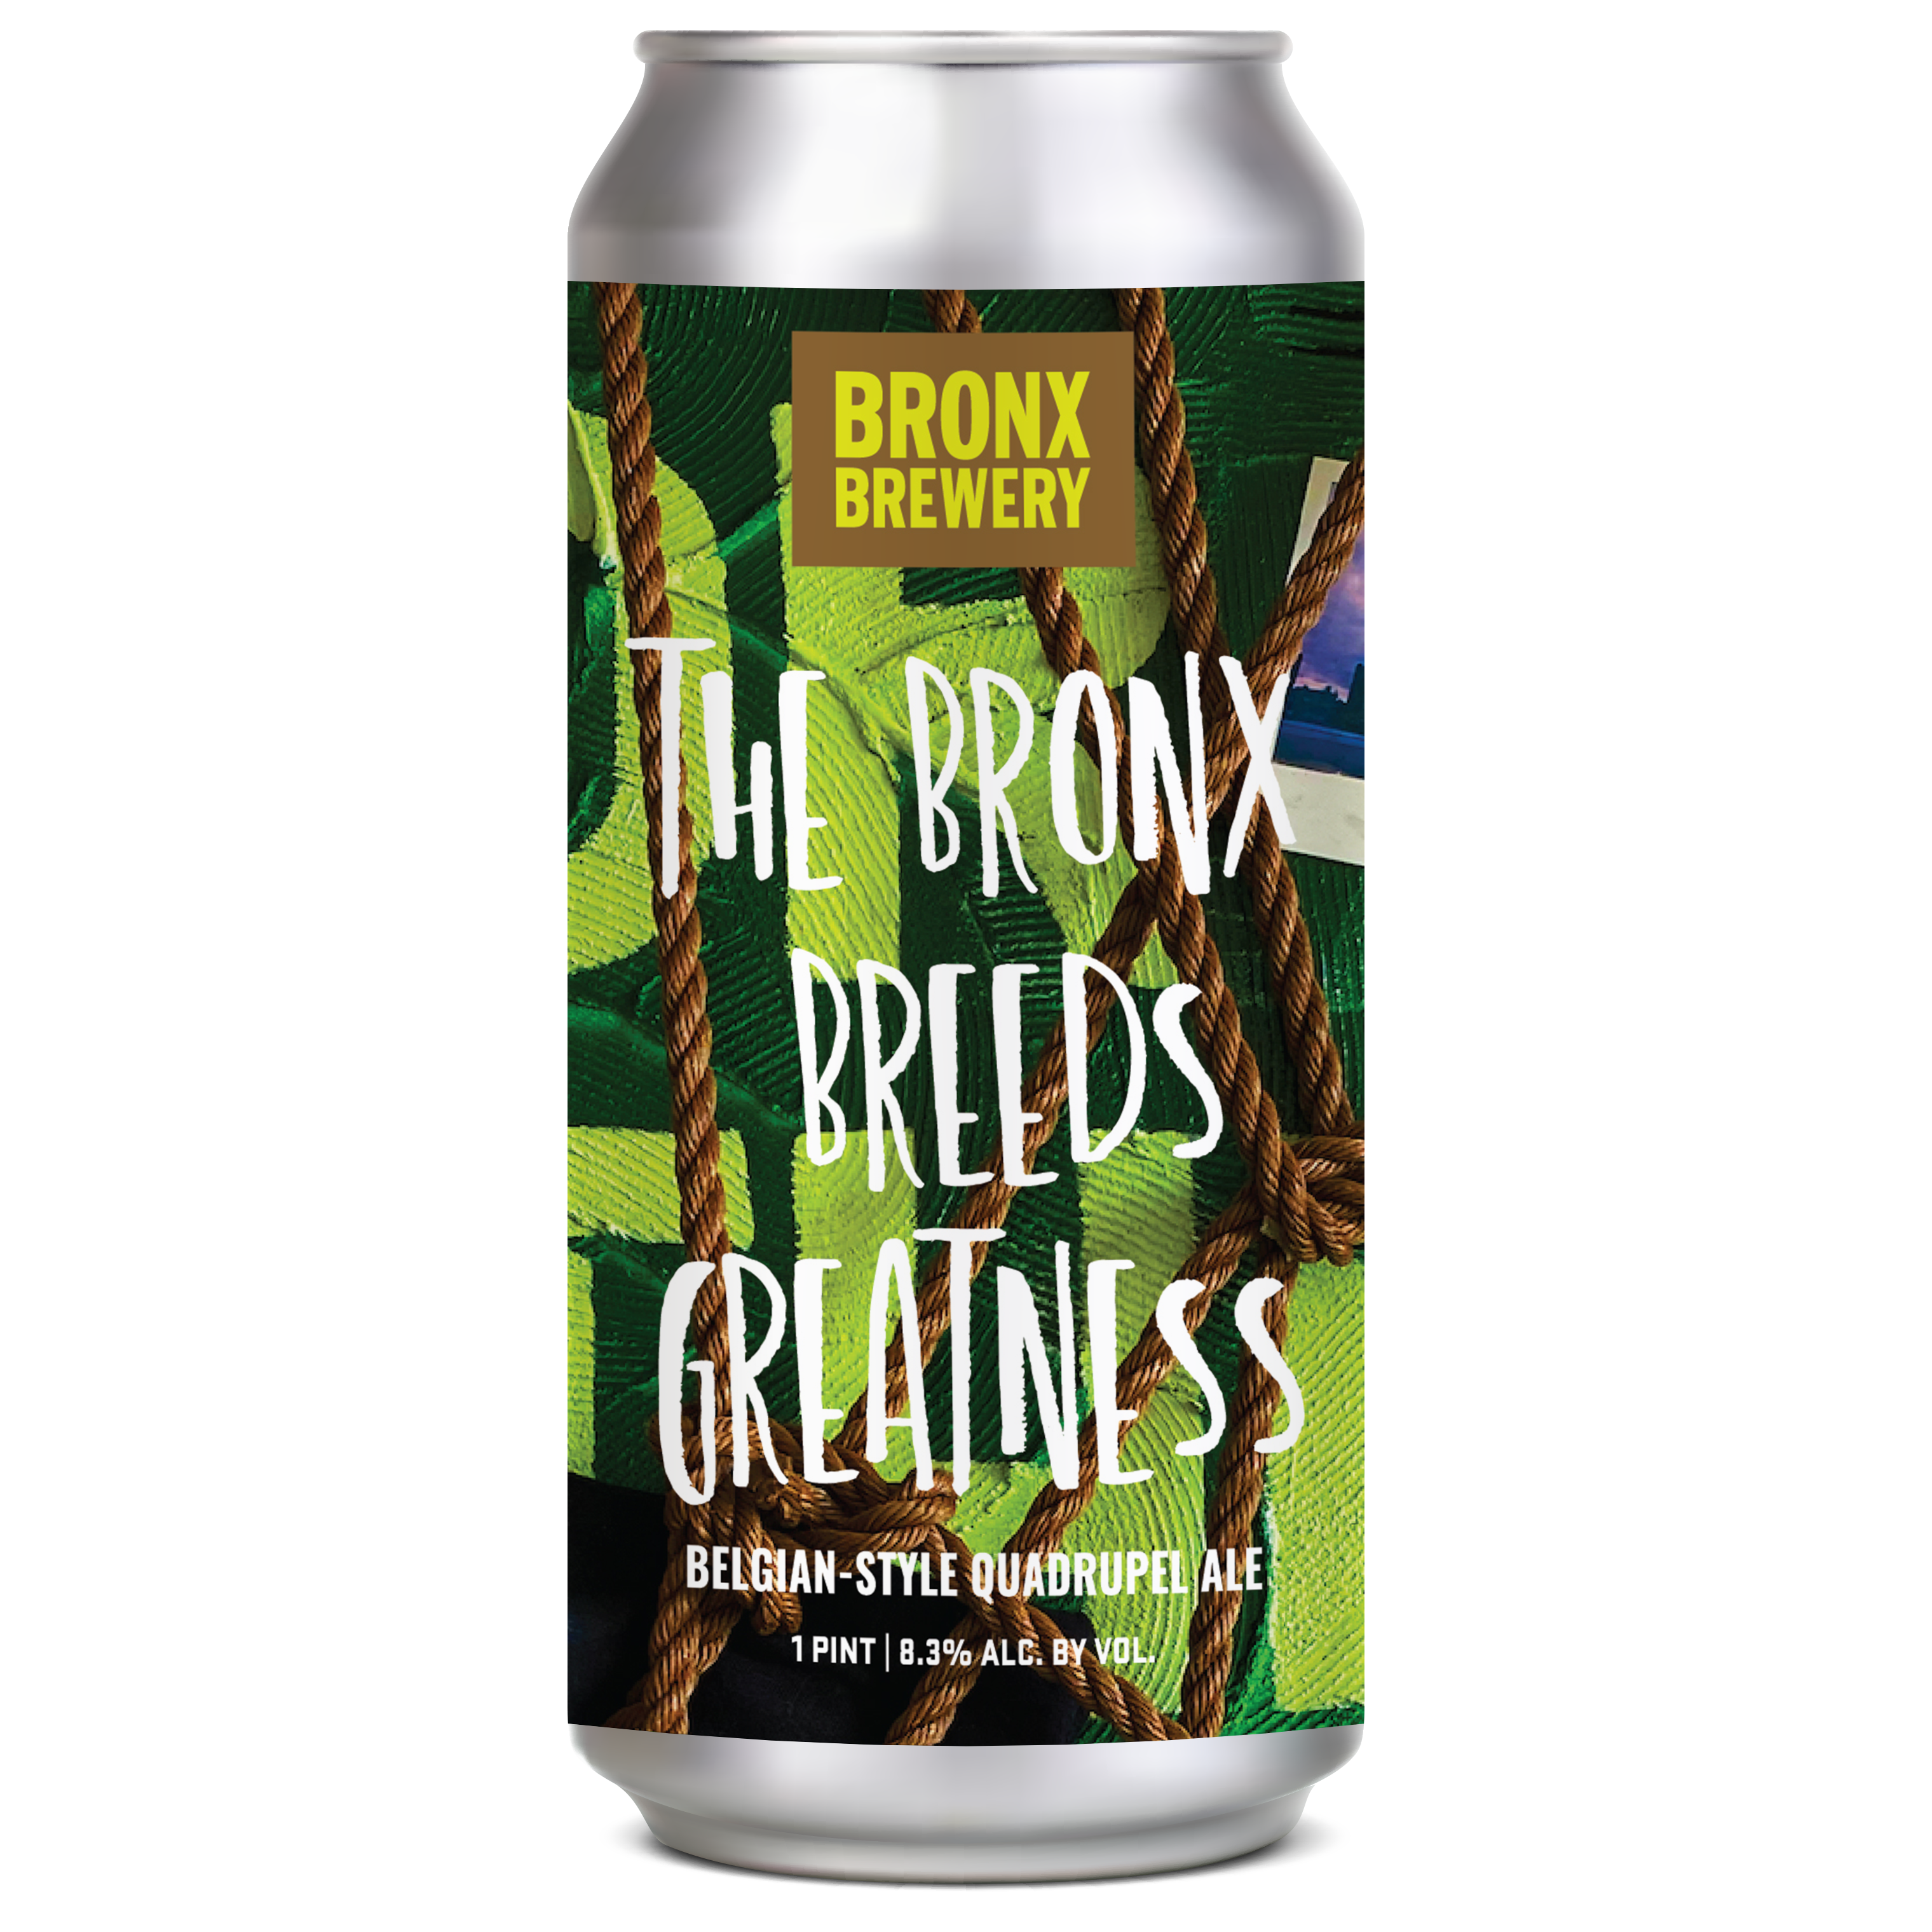 The Bronx Breeds Greatness: Belgian Quadruple Ale